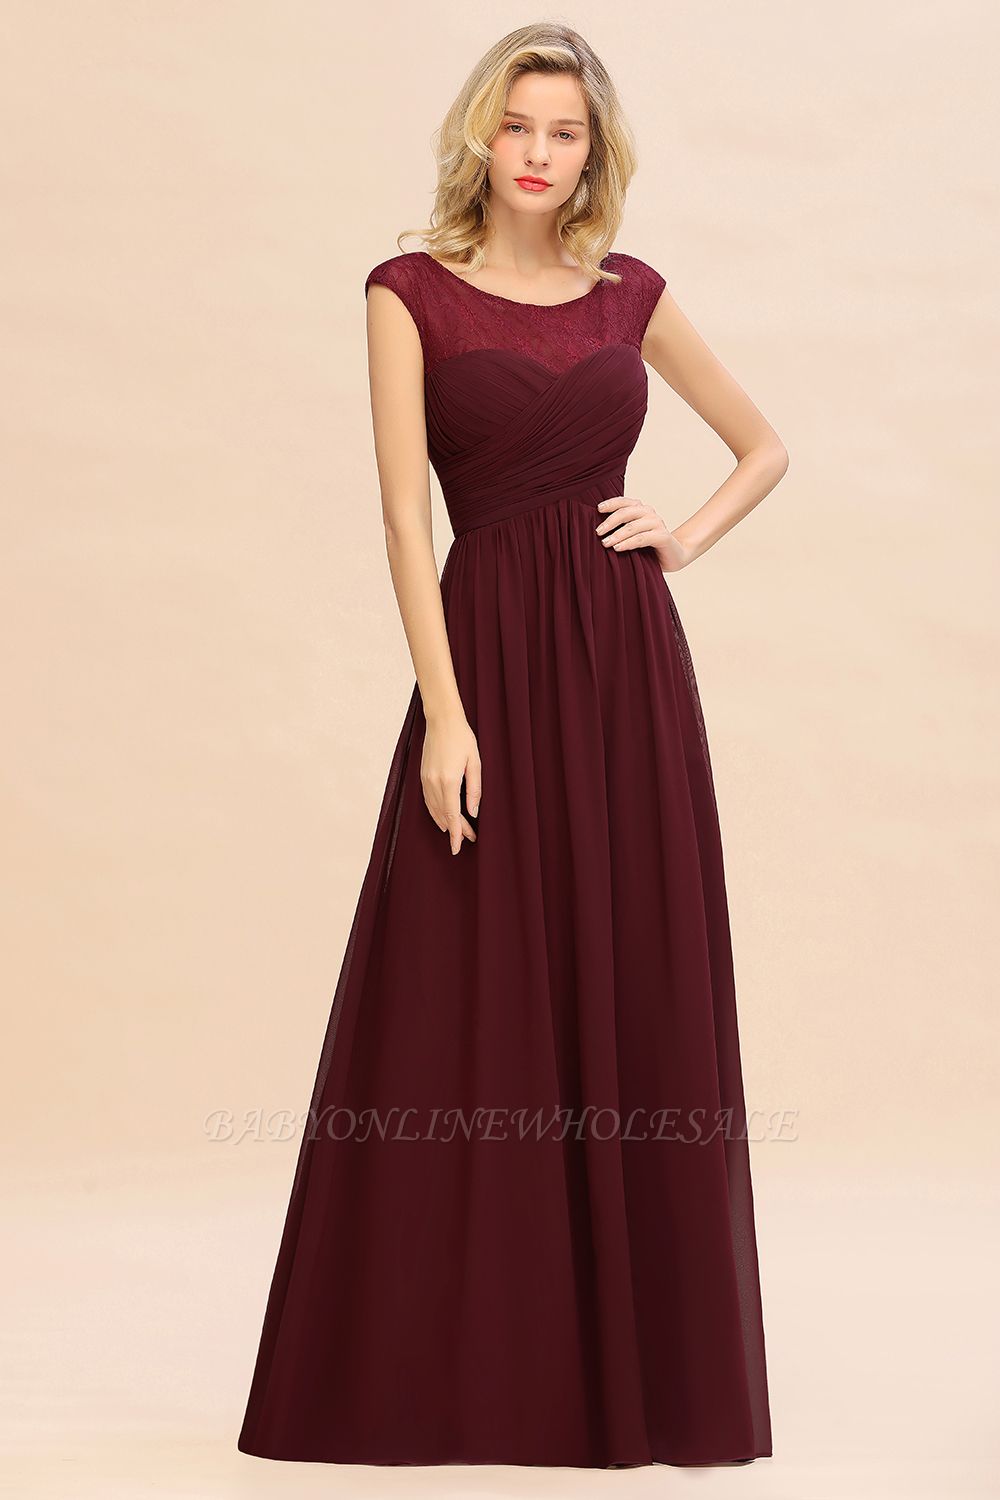 Elegant Jewel Neck Chiffon Aline Evening Dress Floor Length Wsedding Guest Dress